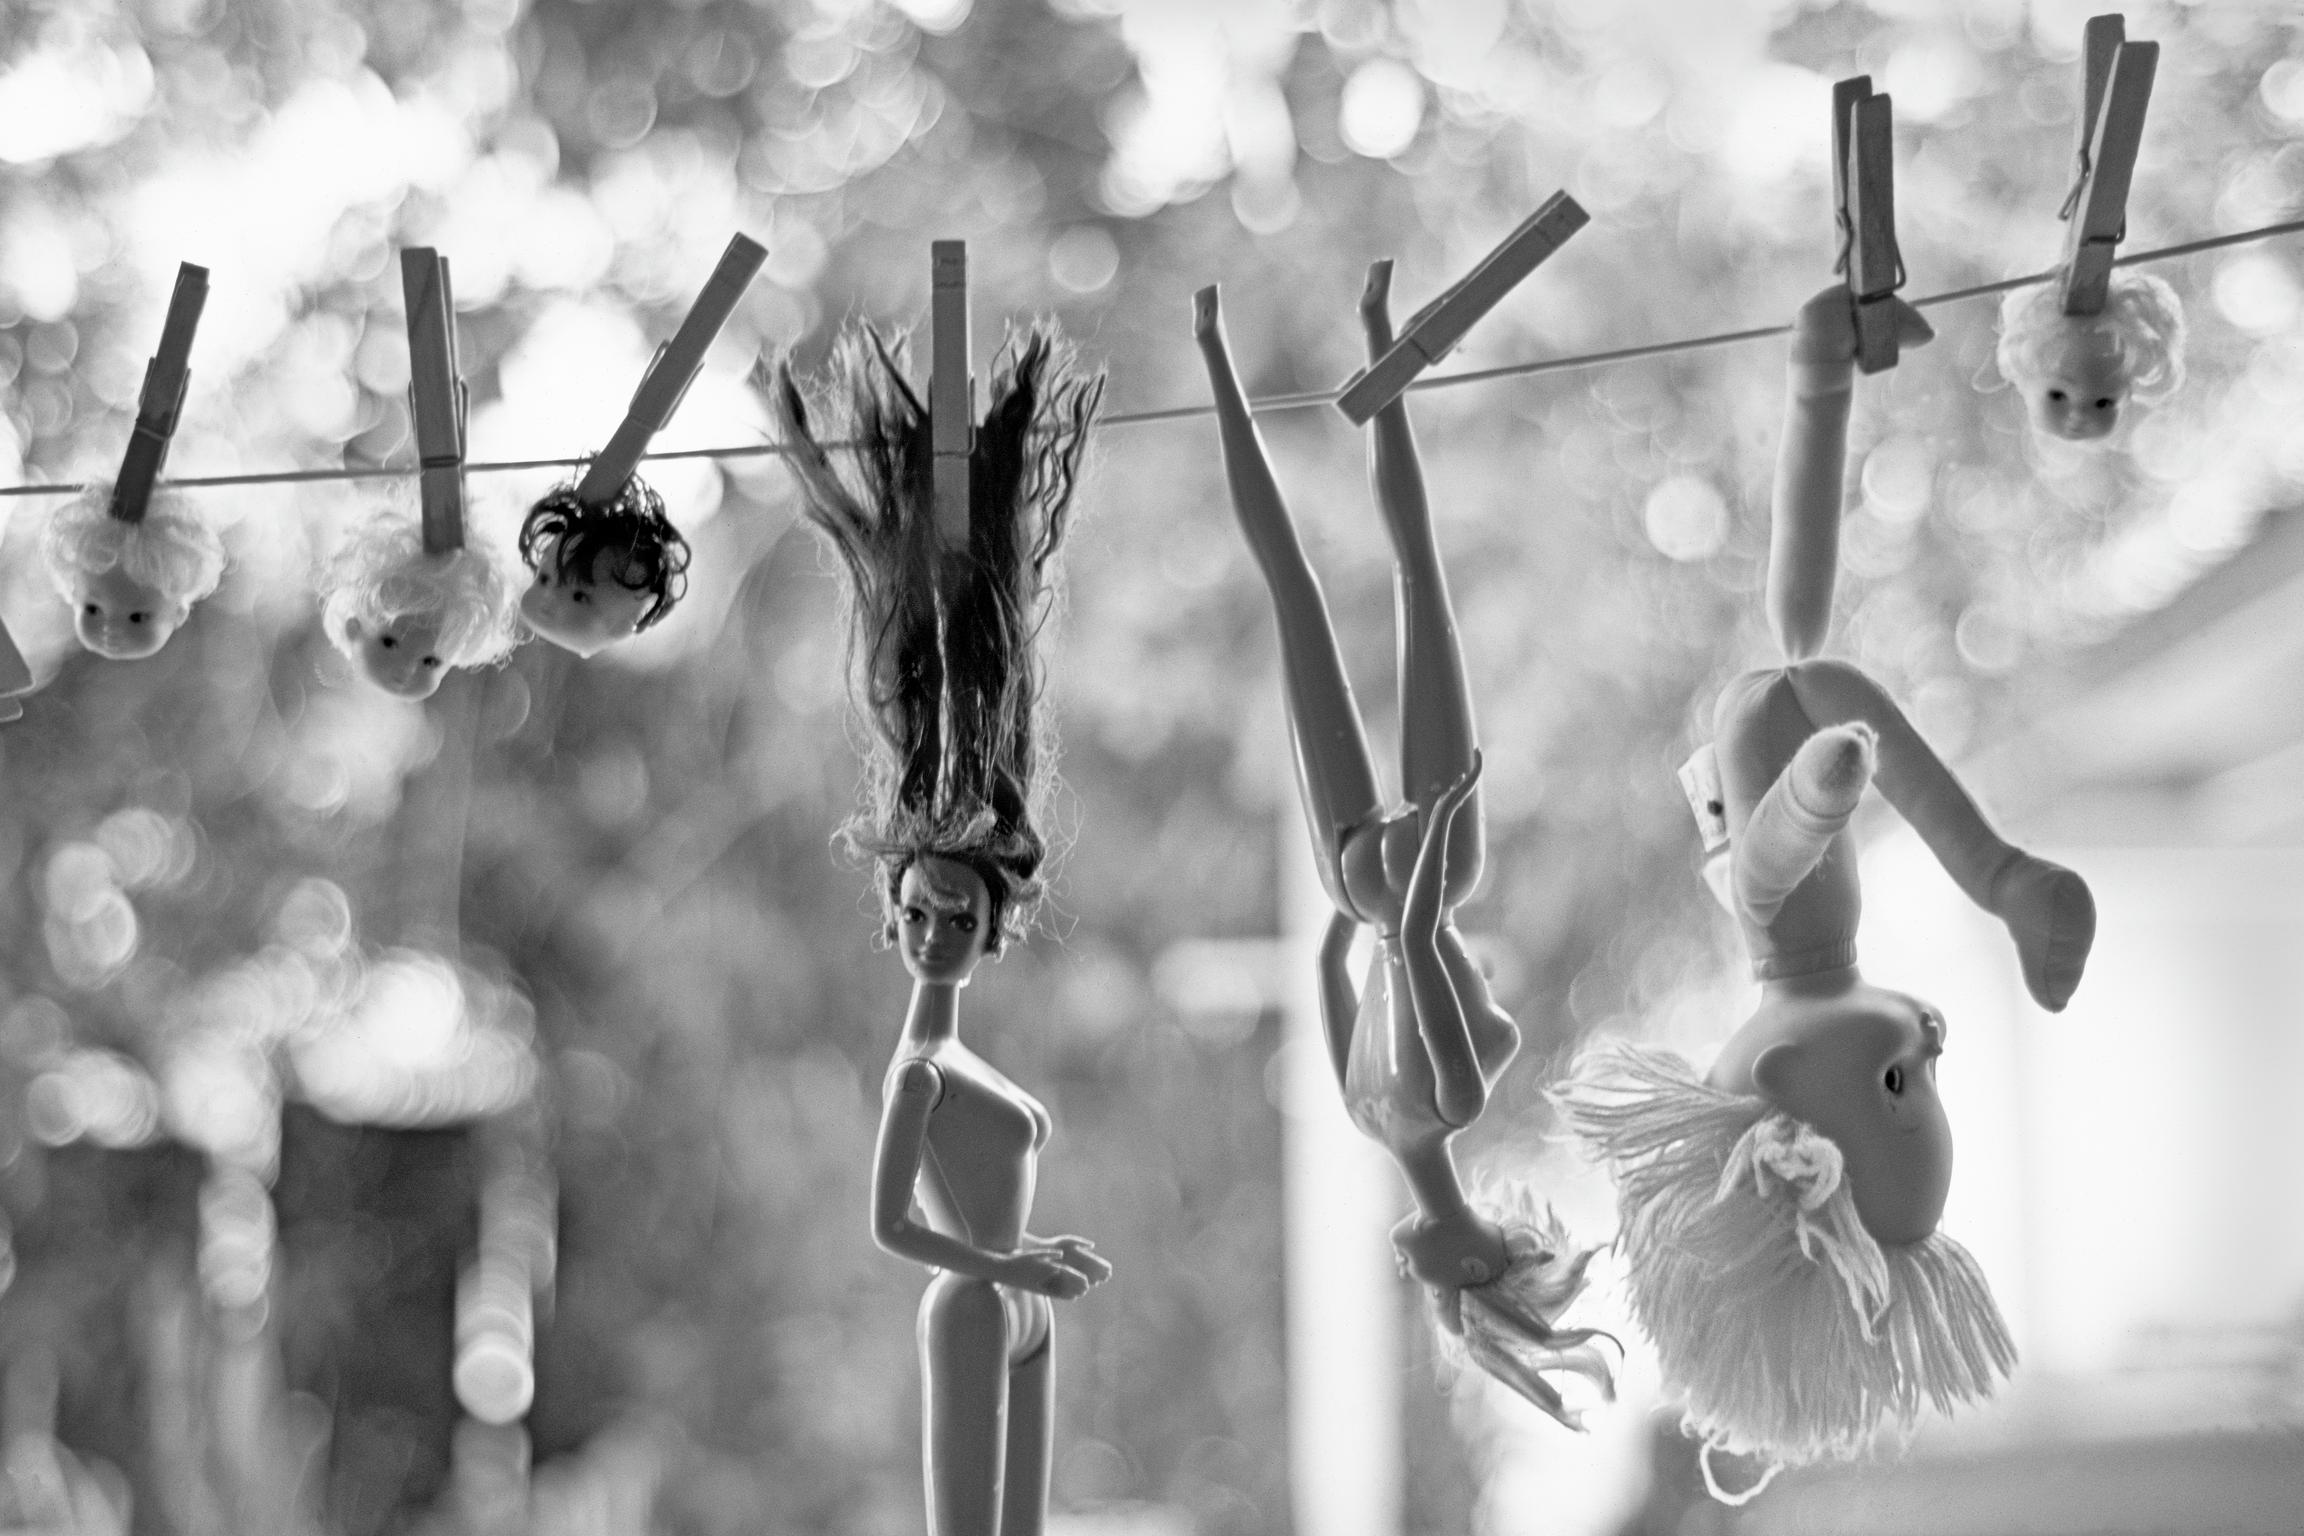 Backyard Barbie Doll washing line is surreal. Mesa, Arizona USA